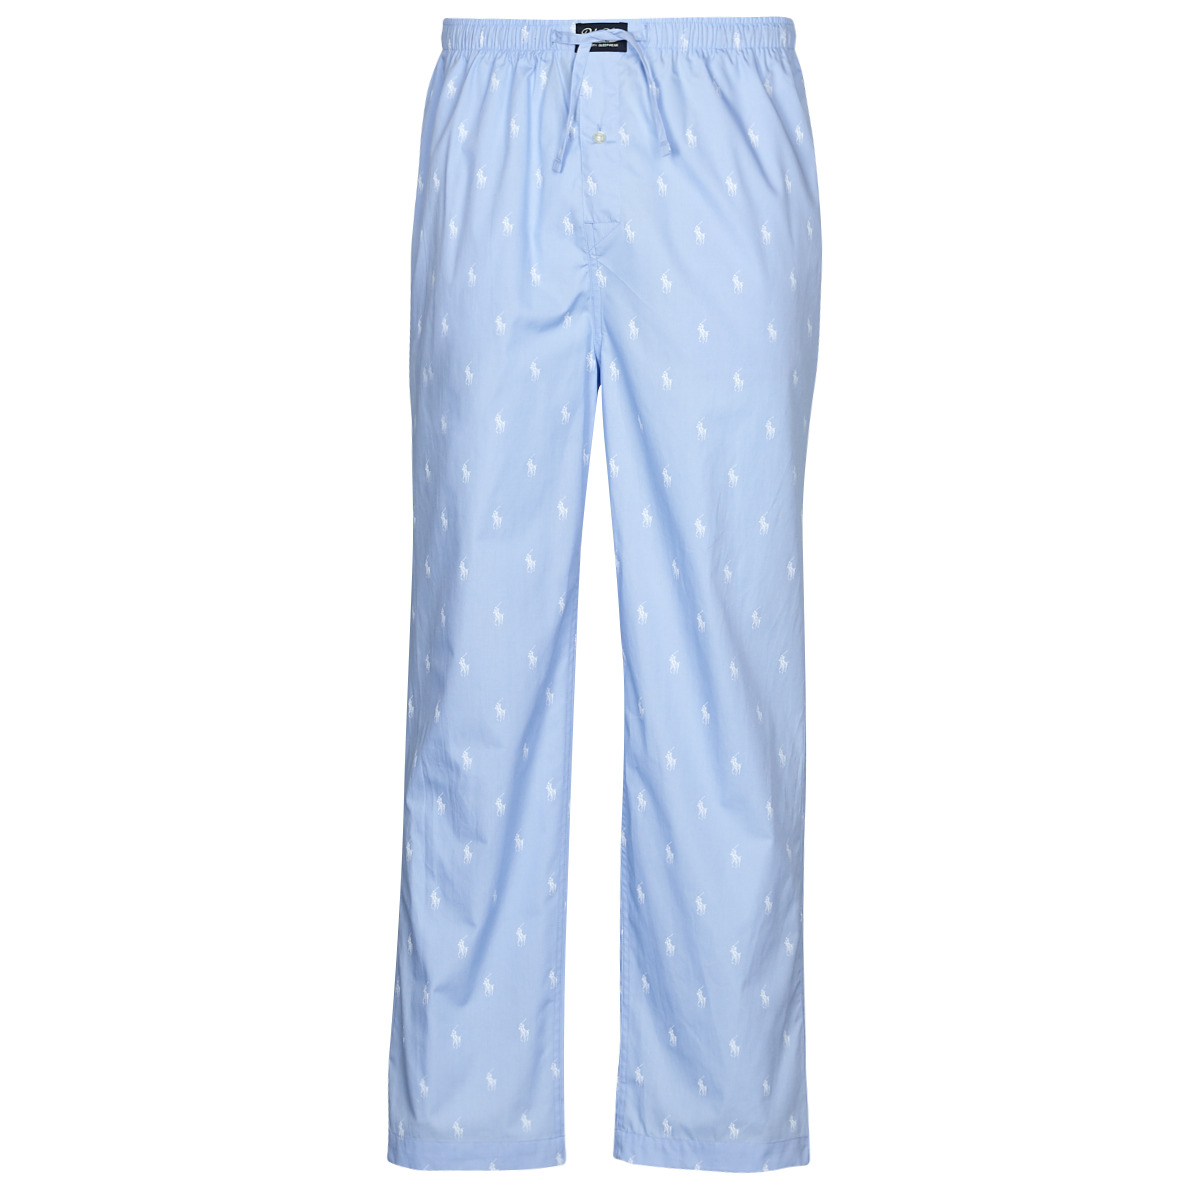 textil Pyjamas/nattlinne Polo Ralph Lauren SLEEPWEAR-PJ PANT-SLEEP-BOTTOM Blå / Himmelsblå / Vit